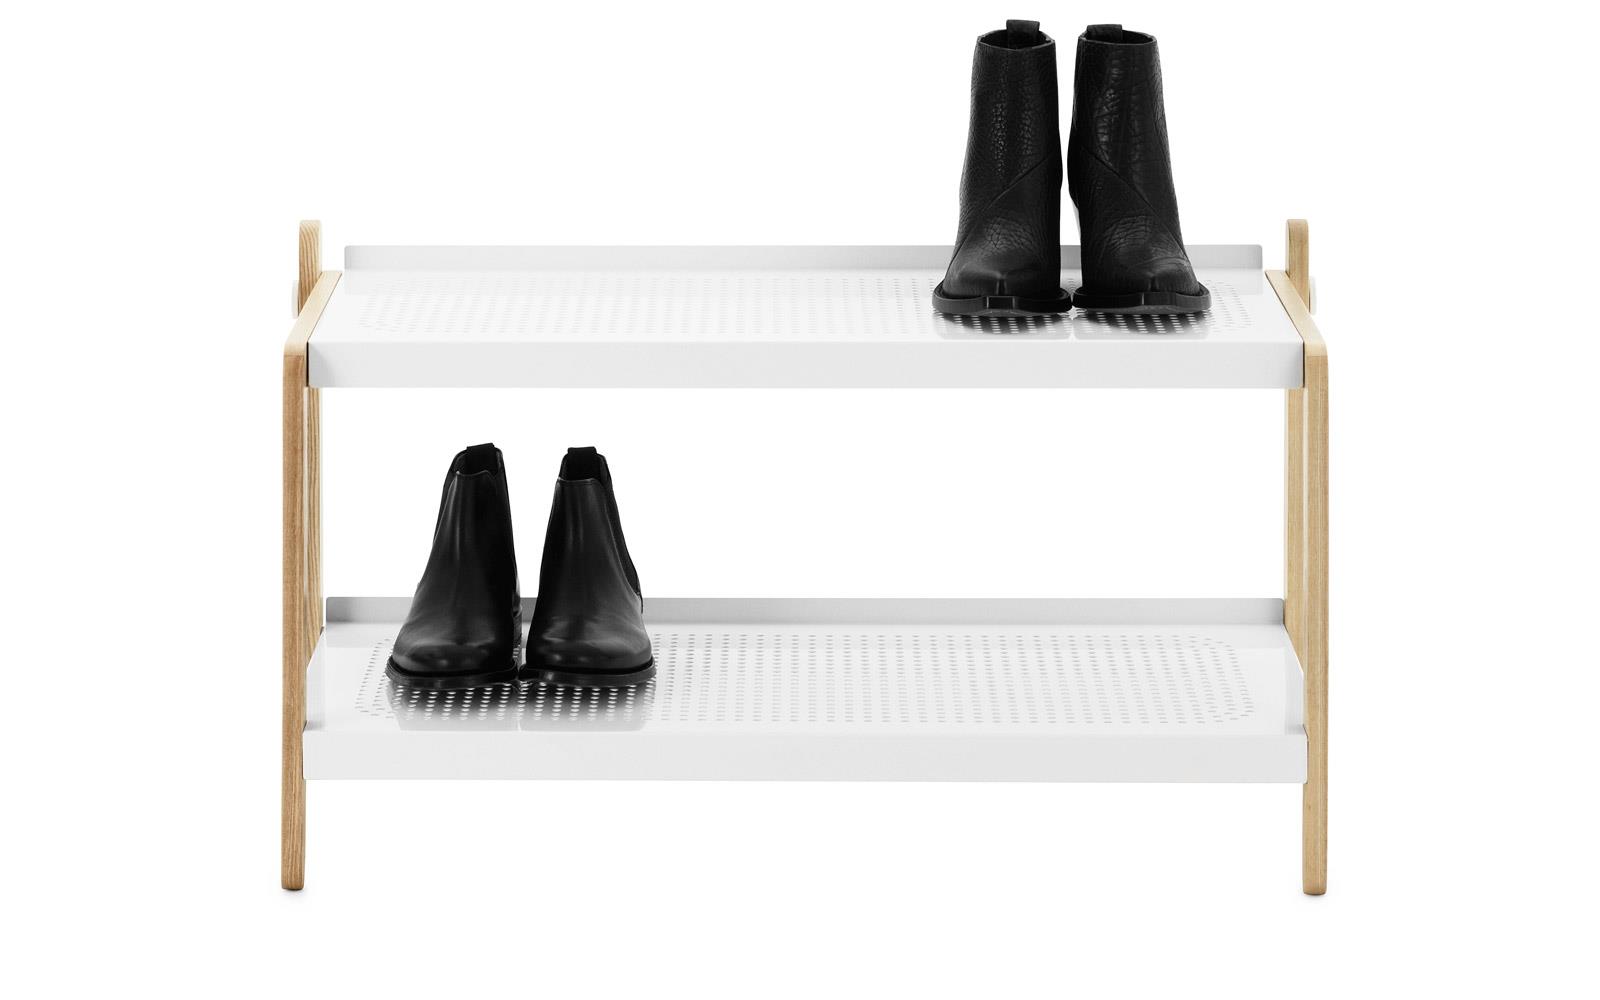 Sko Shoe Rack in white  Industrial design shoe storage